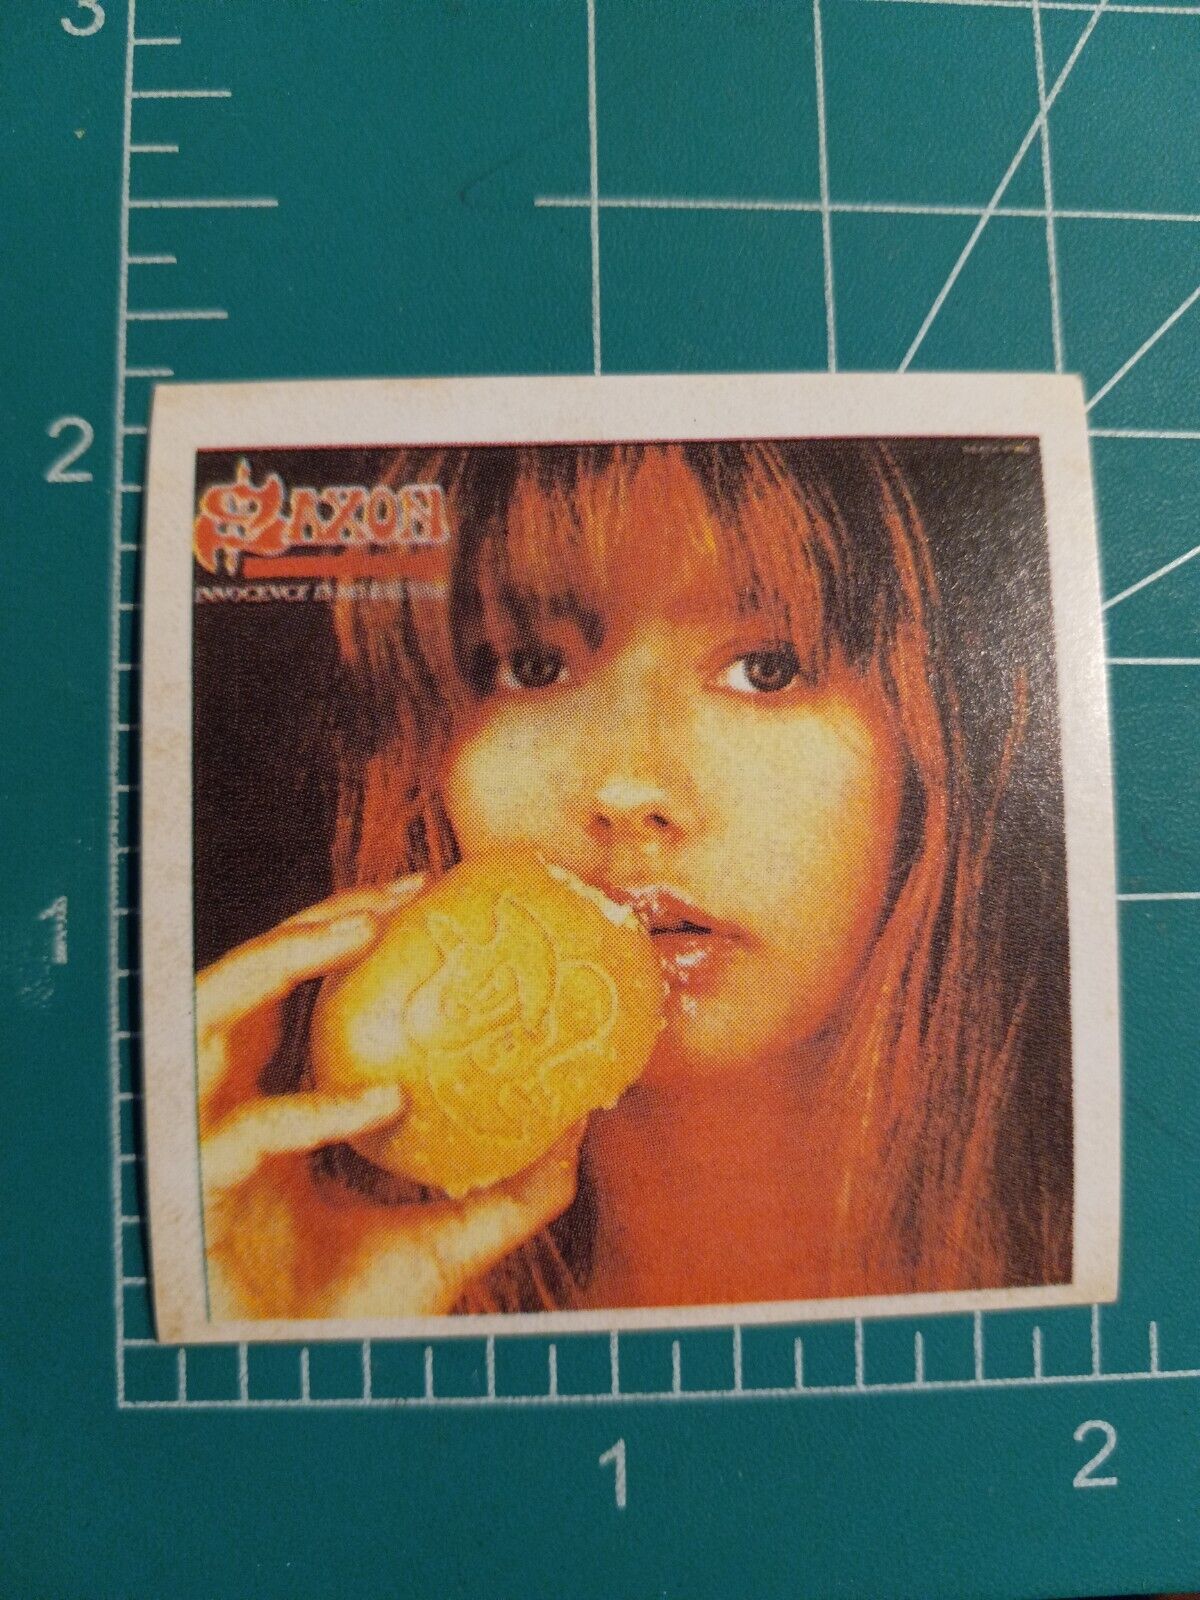 1987 ROCK FREE music Sticker Card Brazil SAXON GROUP BAND #136